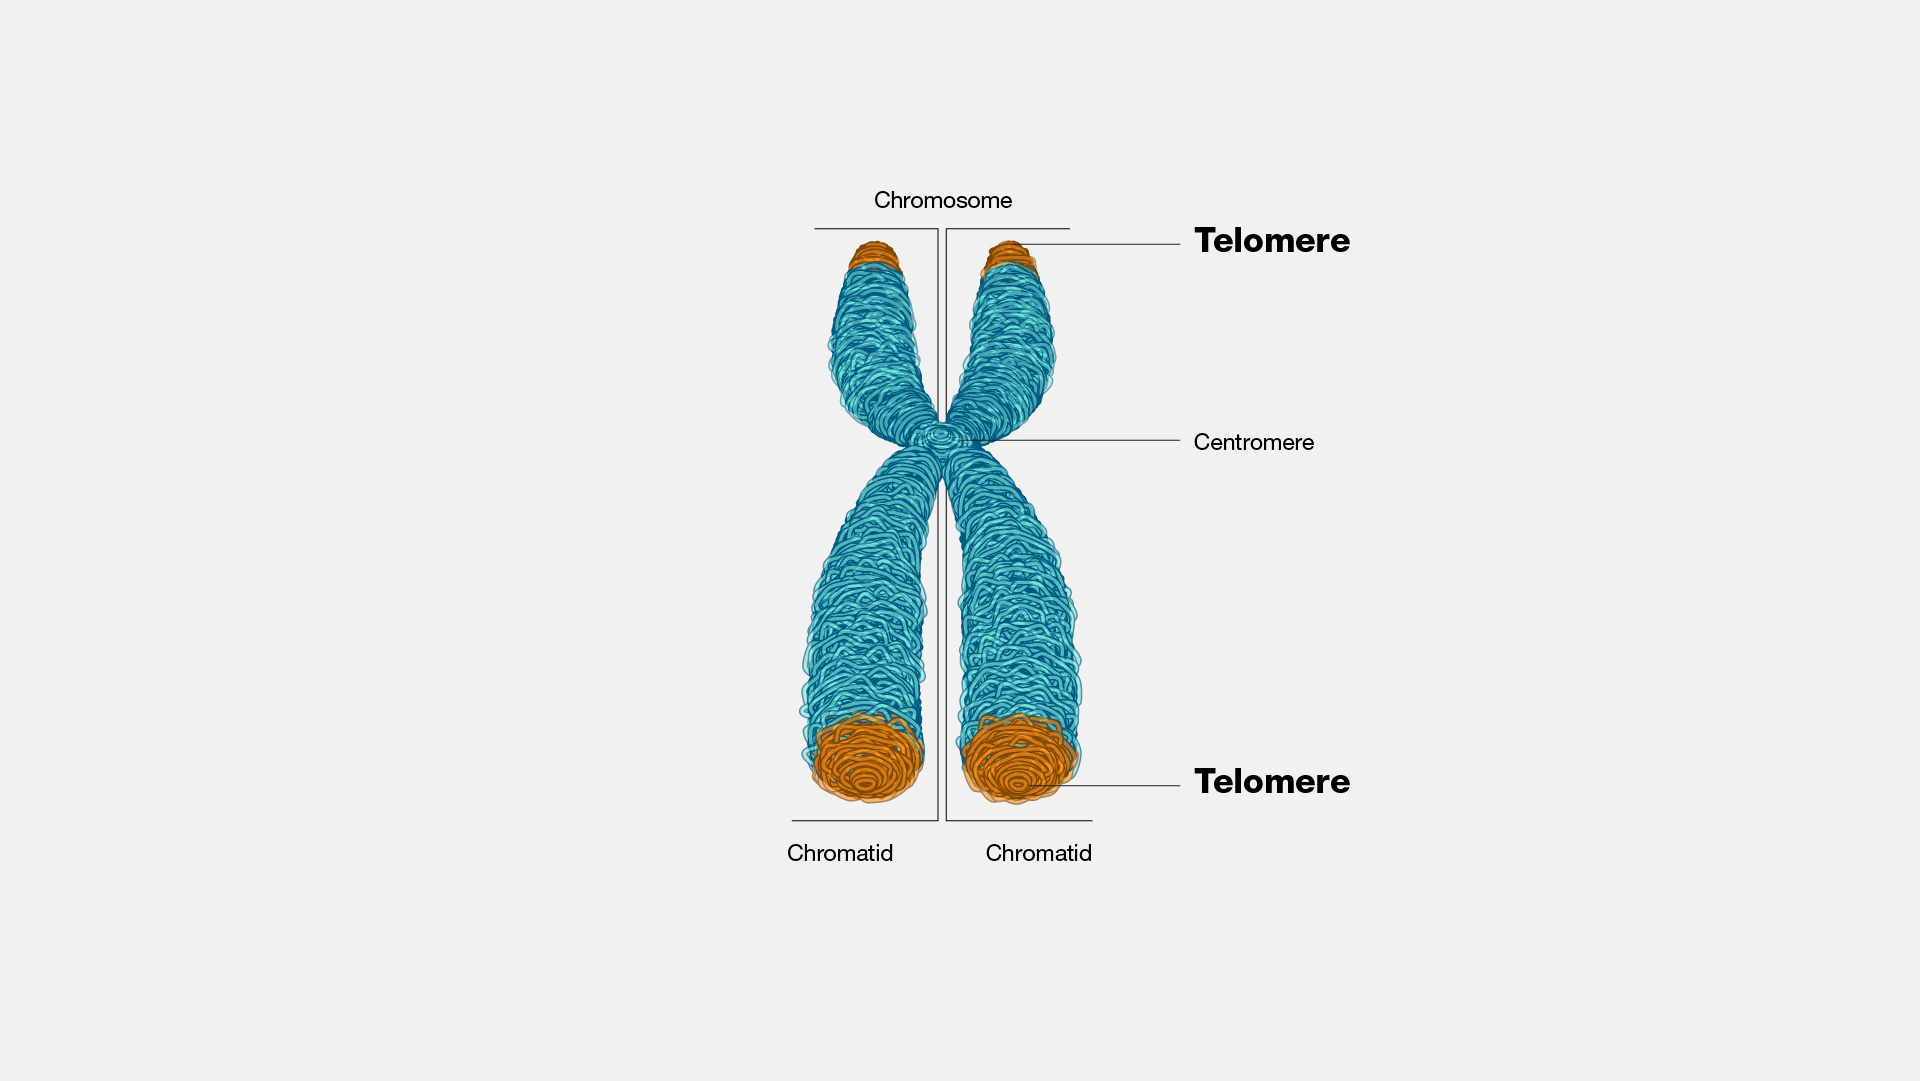  Telomere